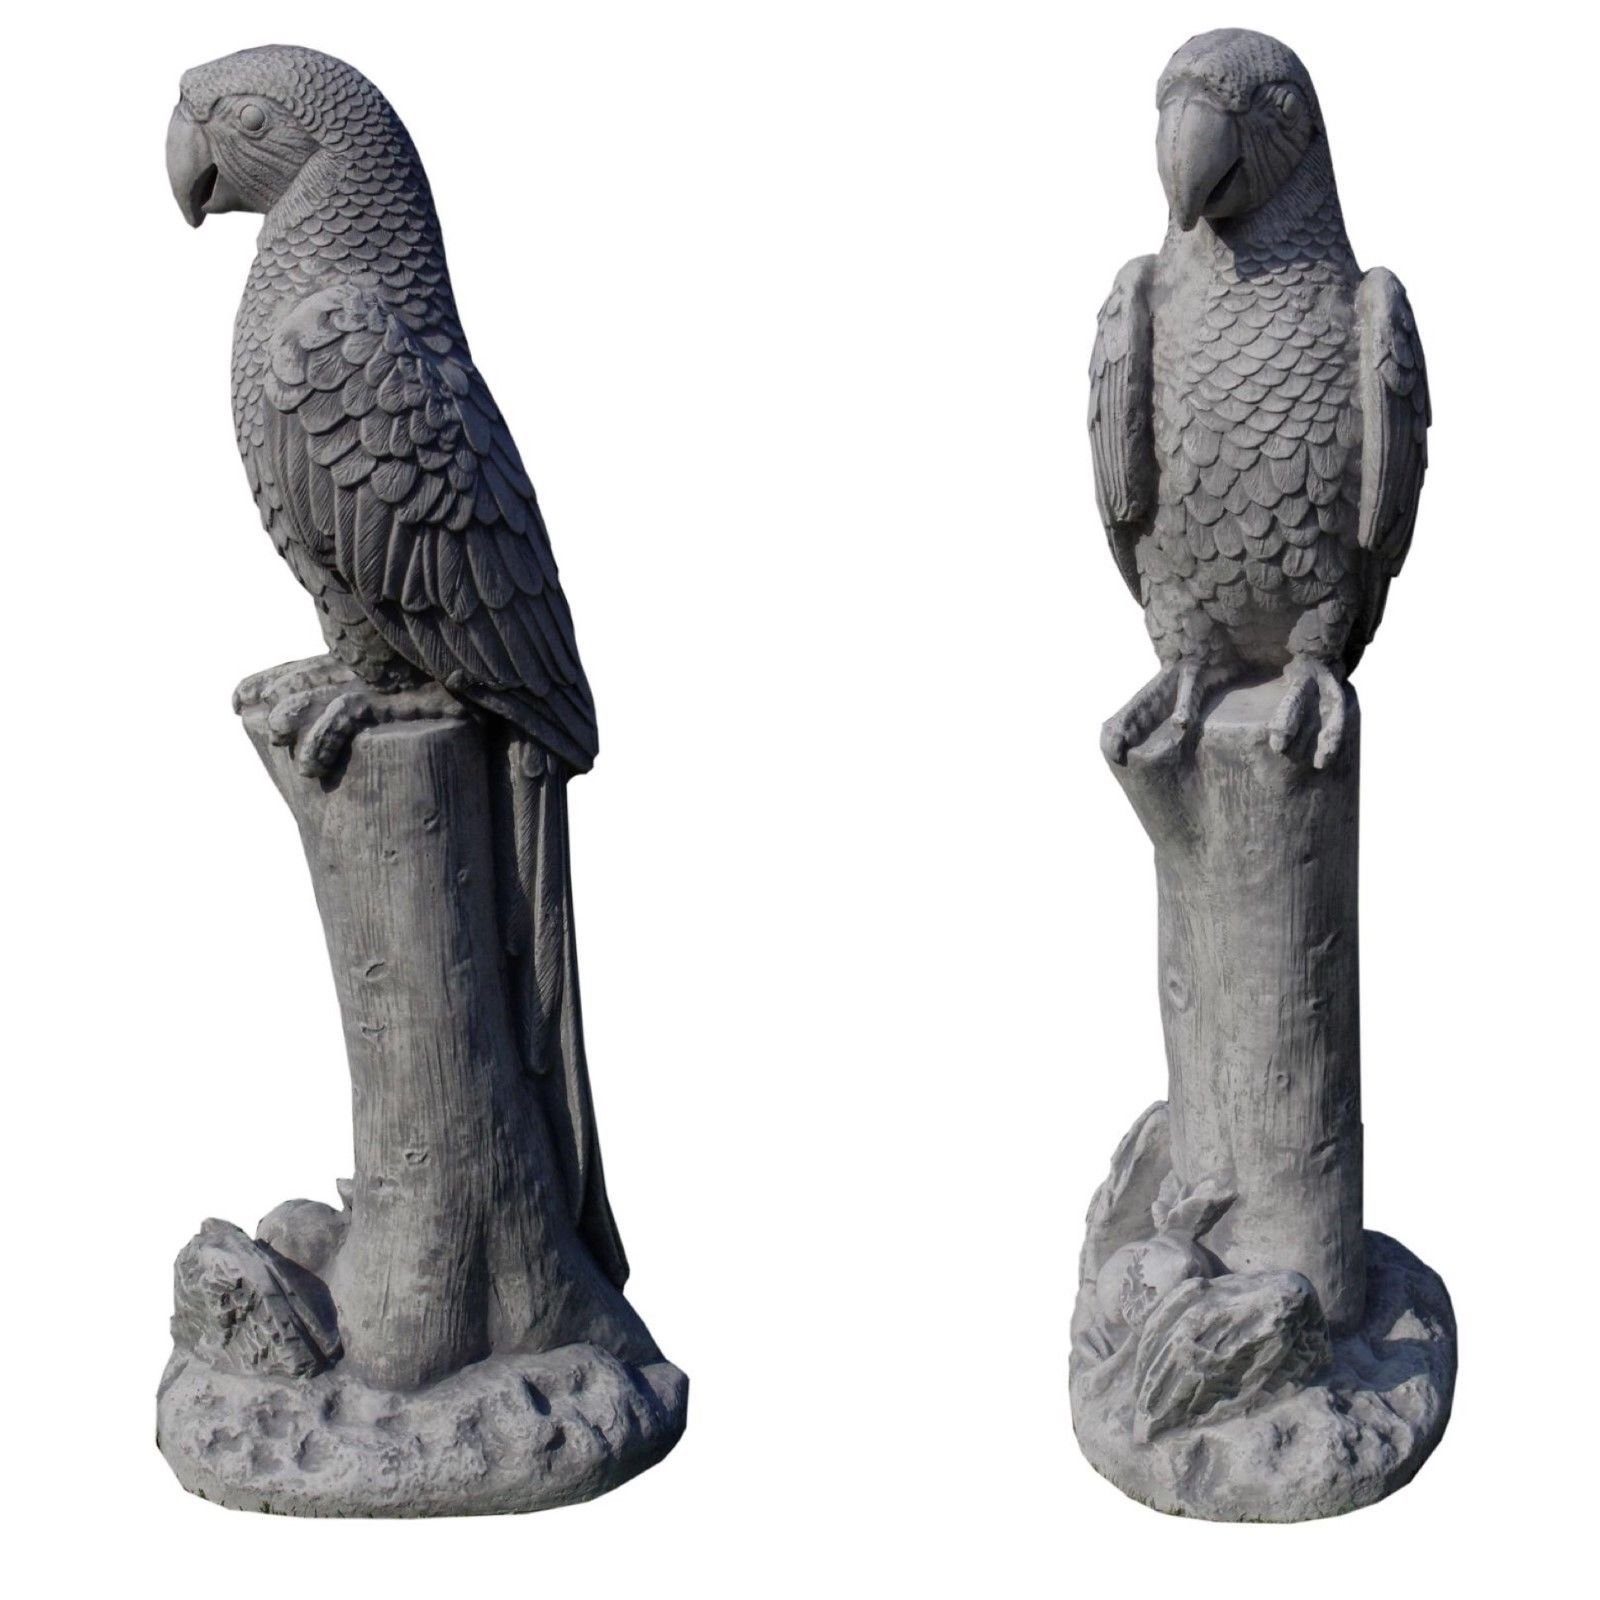 Antikes Wohndesign Gartenfigur 2 x Papageien Figuren Steinfiguren Vogelfiguren Ara Kakadu Garten